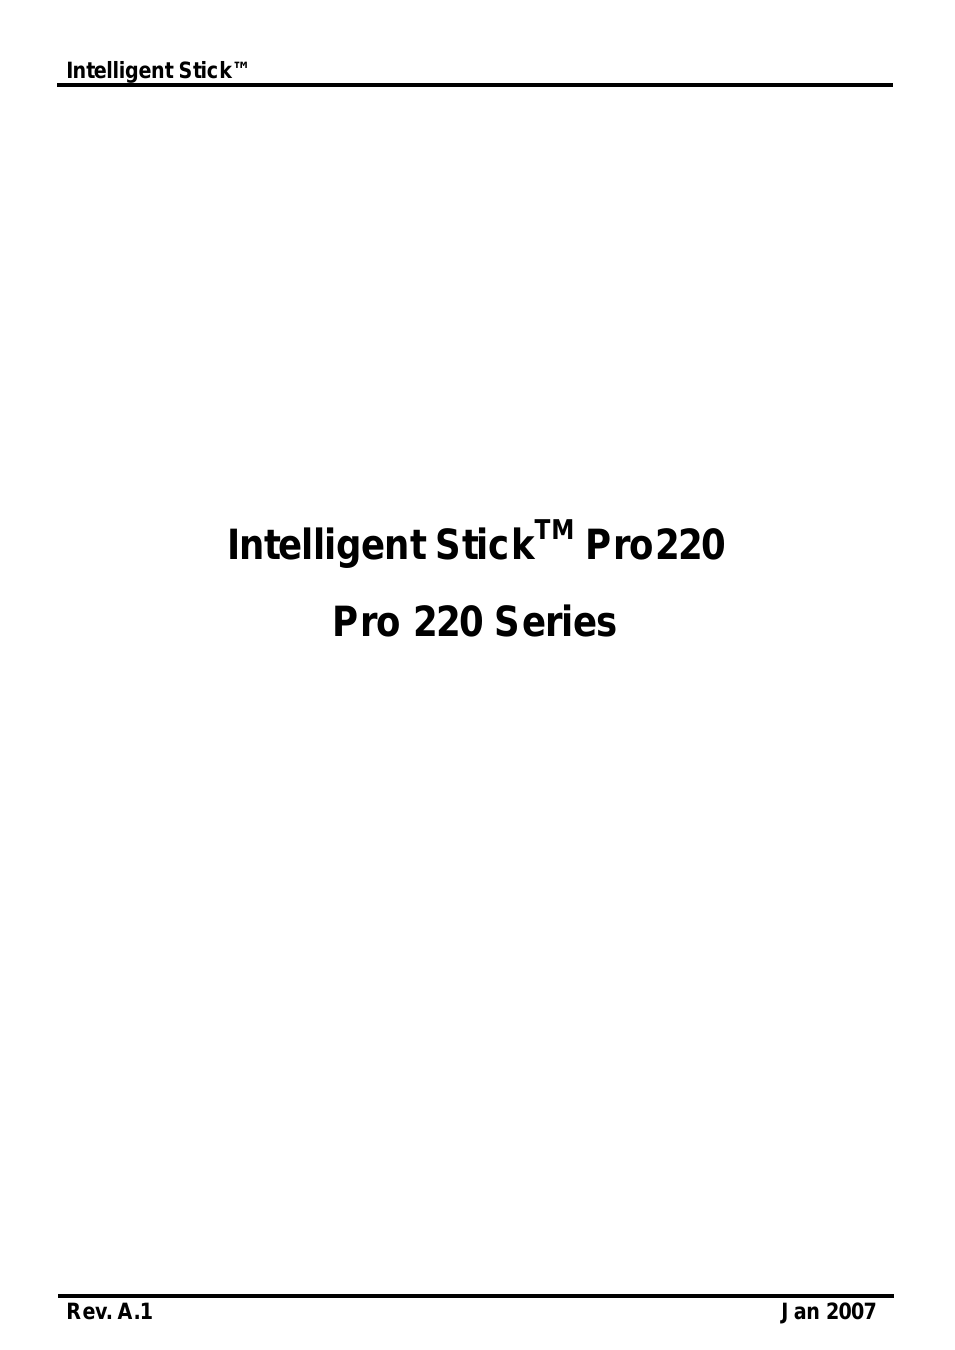 Intellient Stick Pro 220